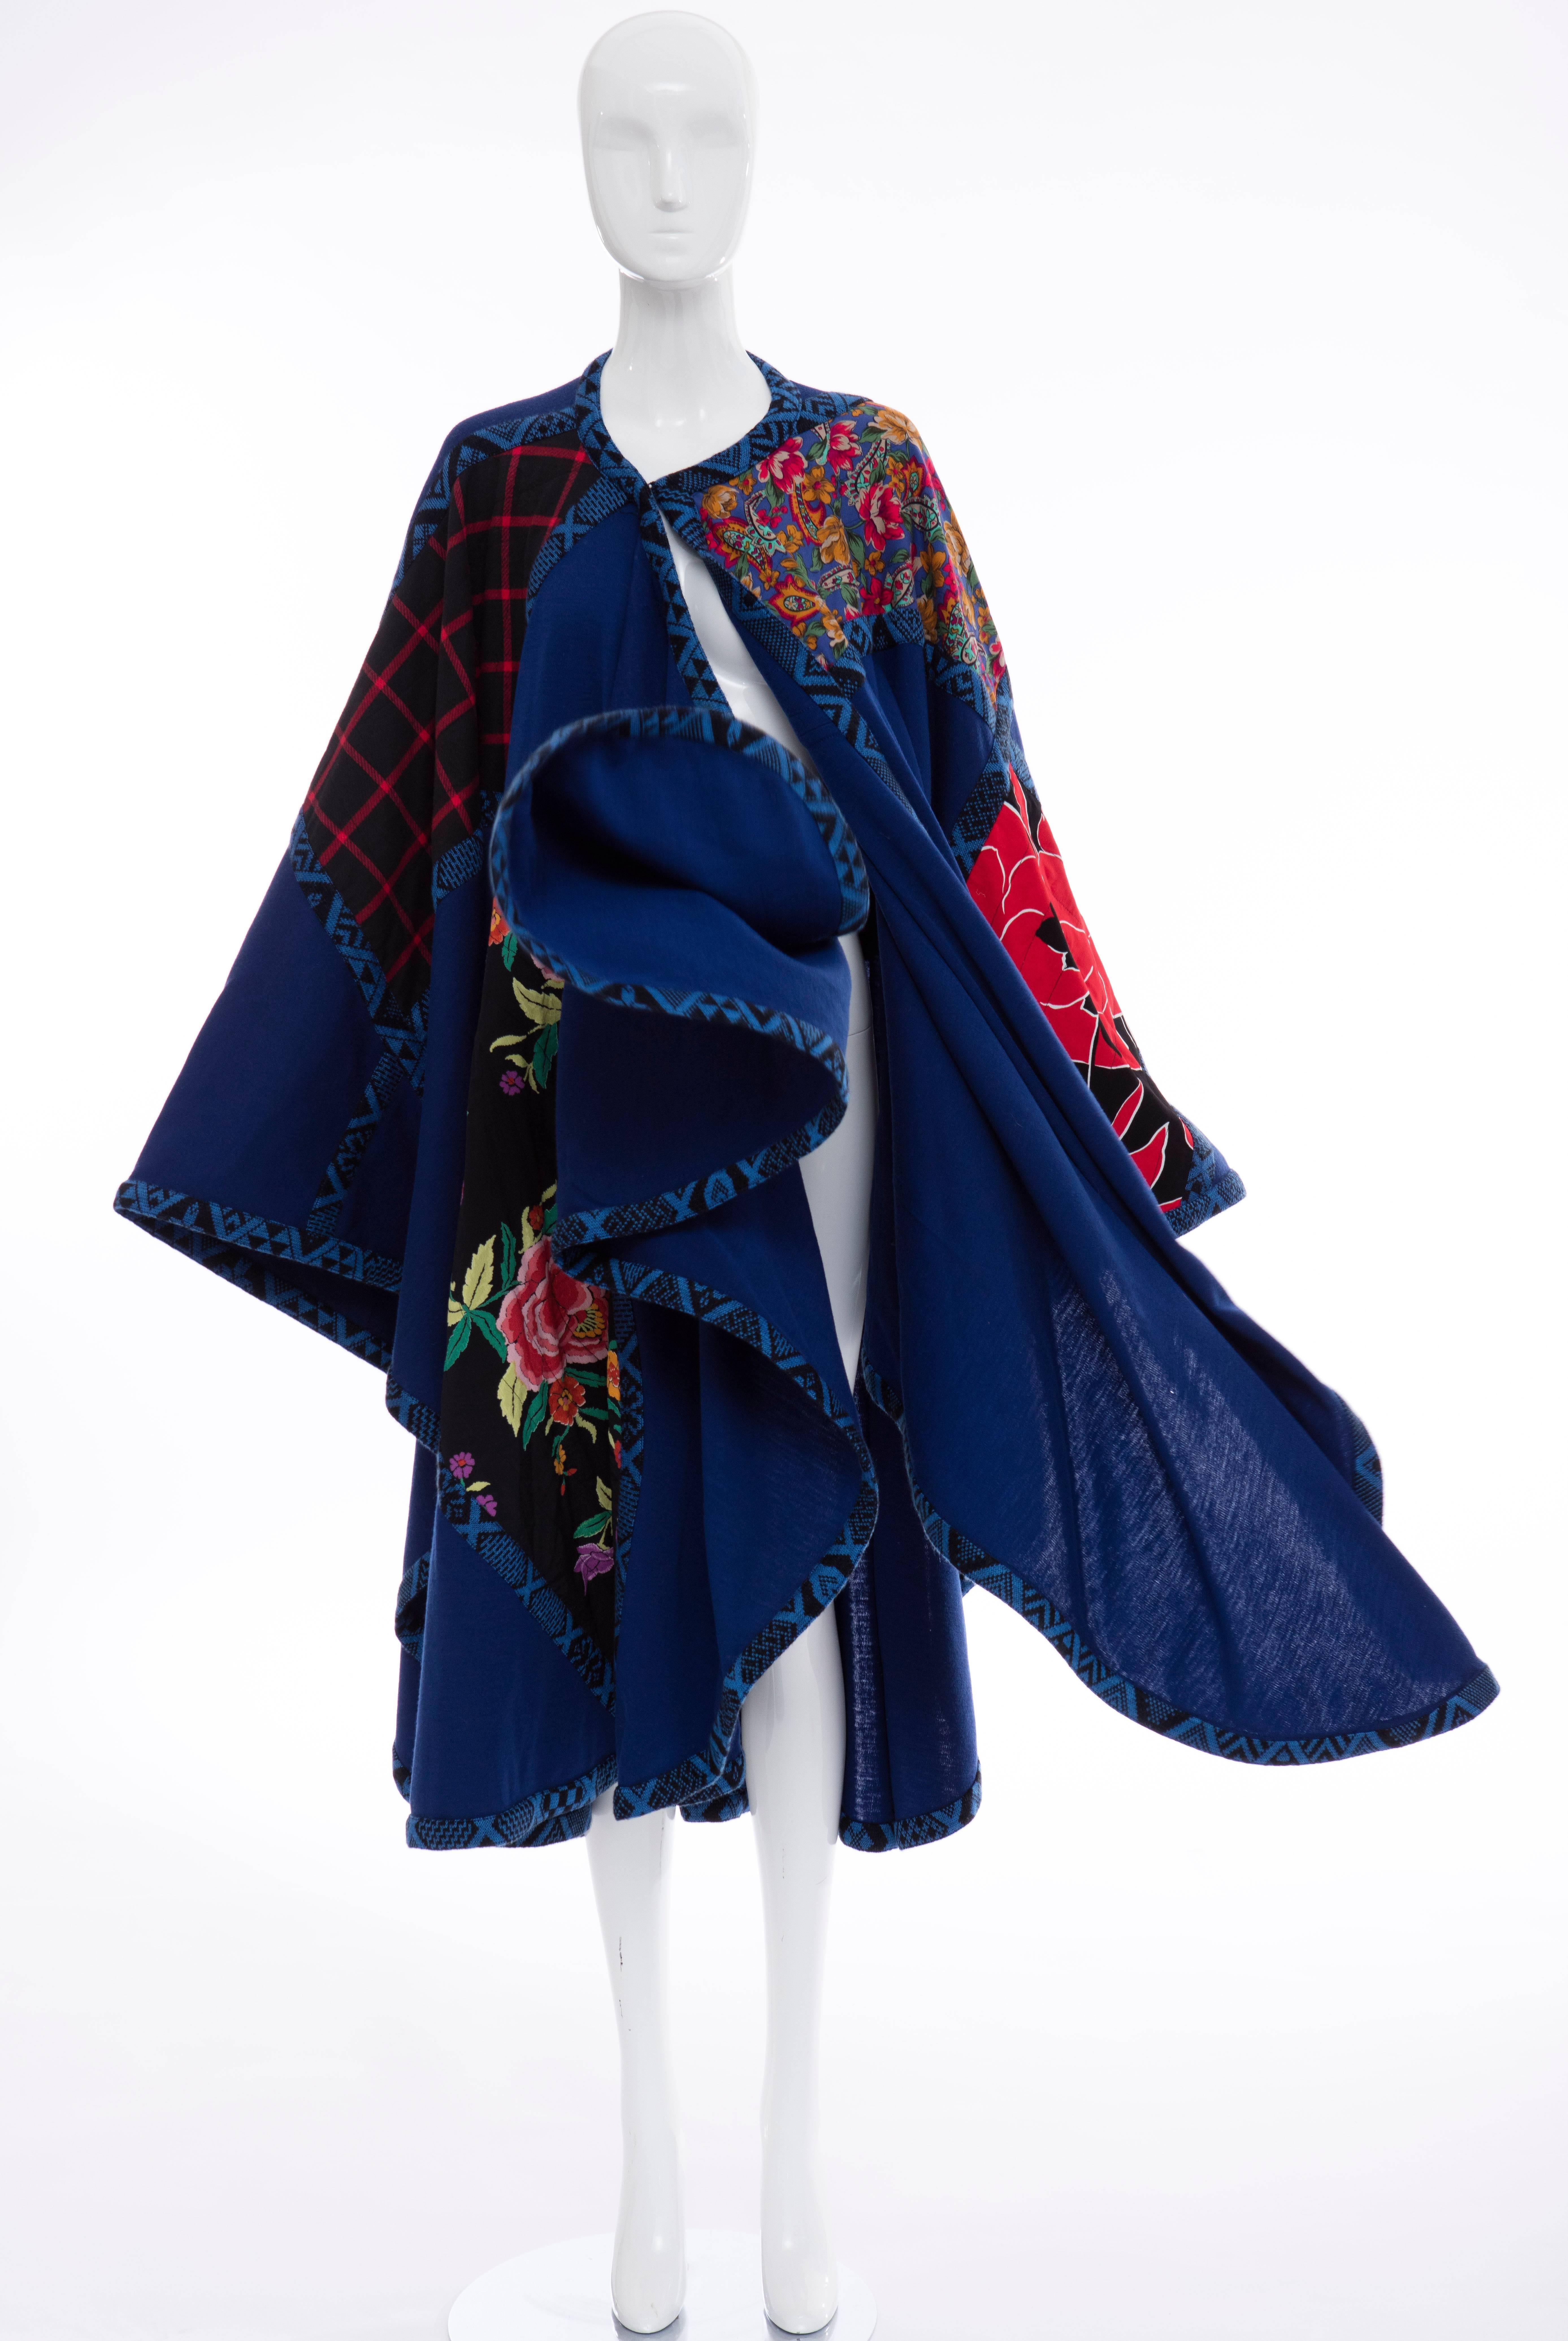 Koos Van Den Akker Royal Blue Cloak With Floral Quilted Patchwork, Circa 1980's 3